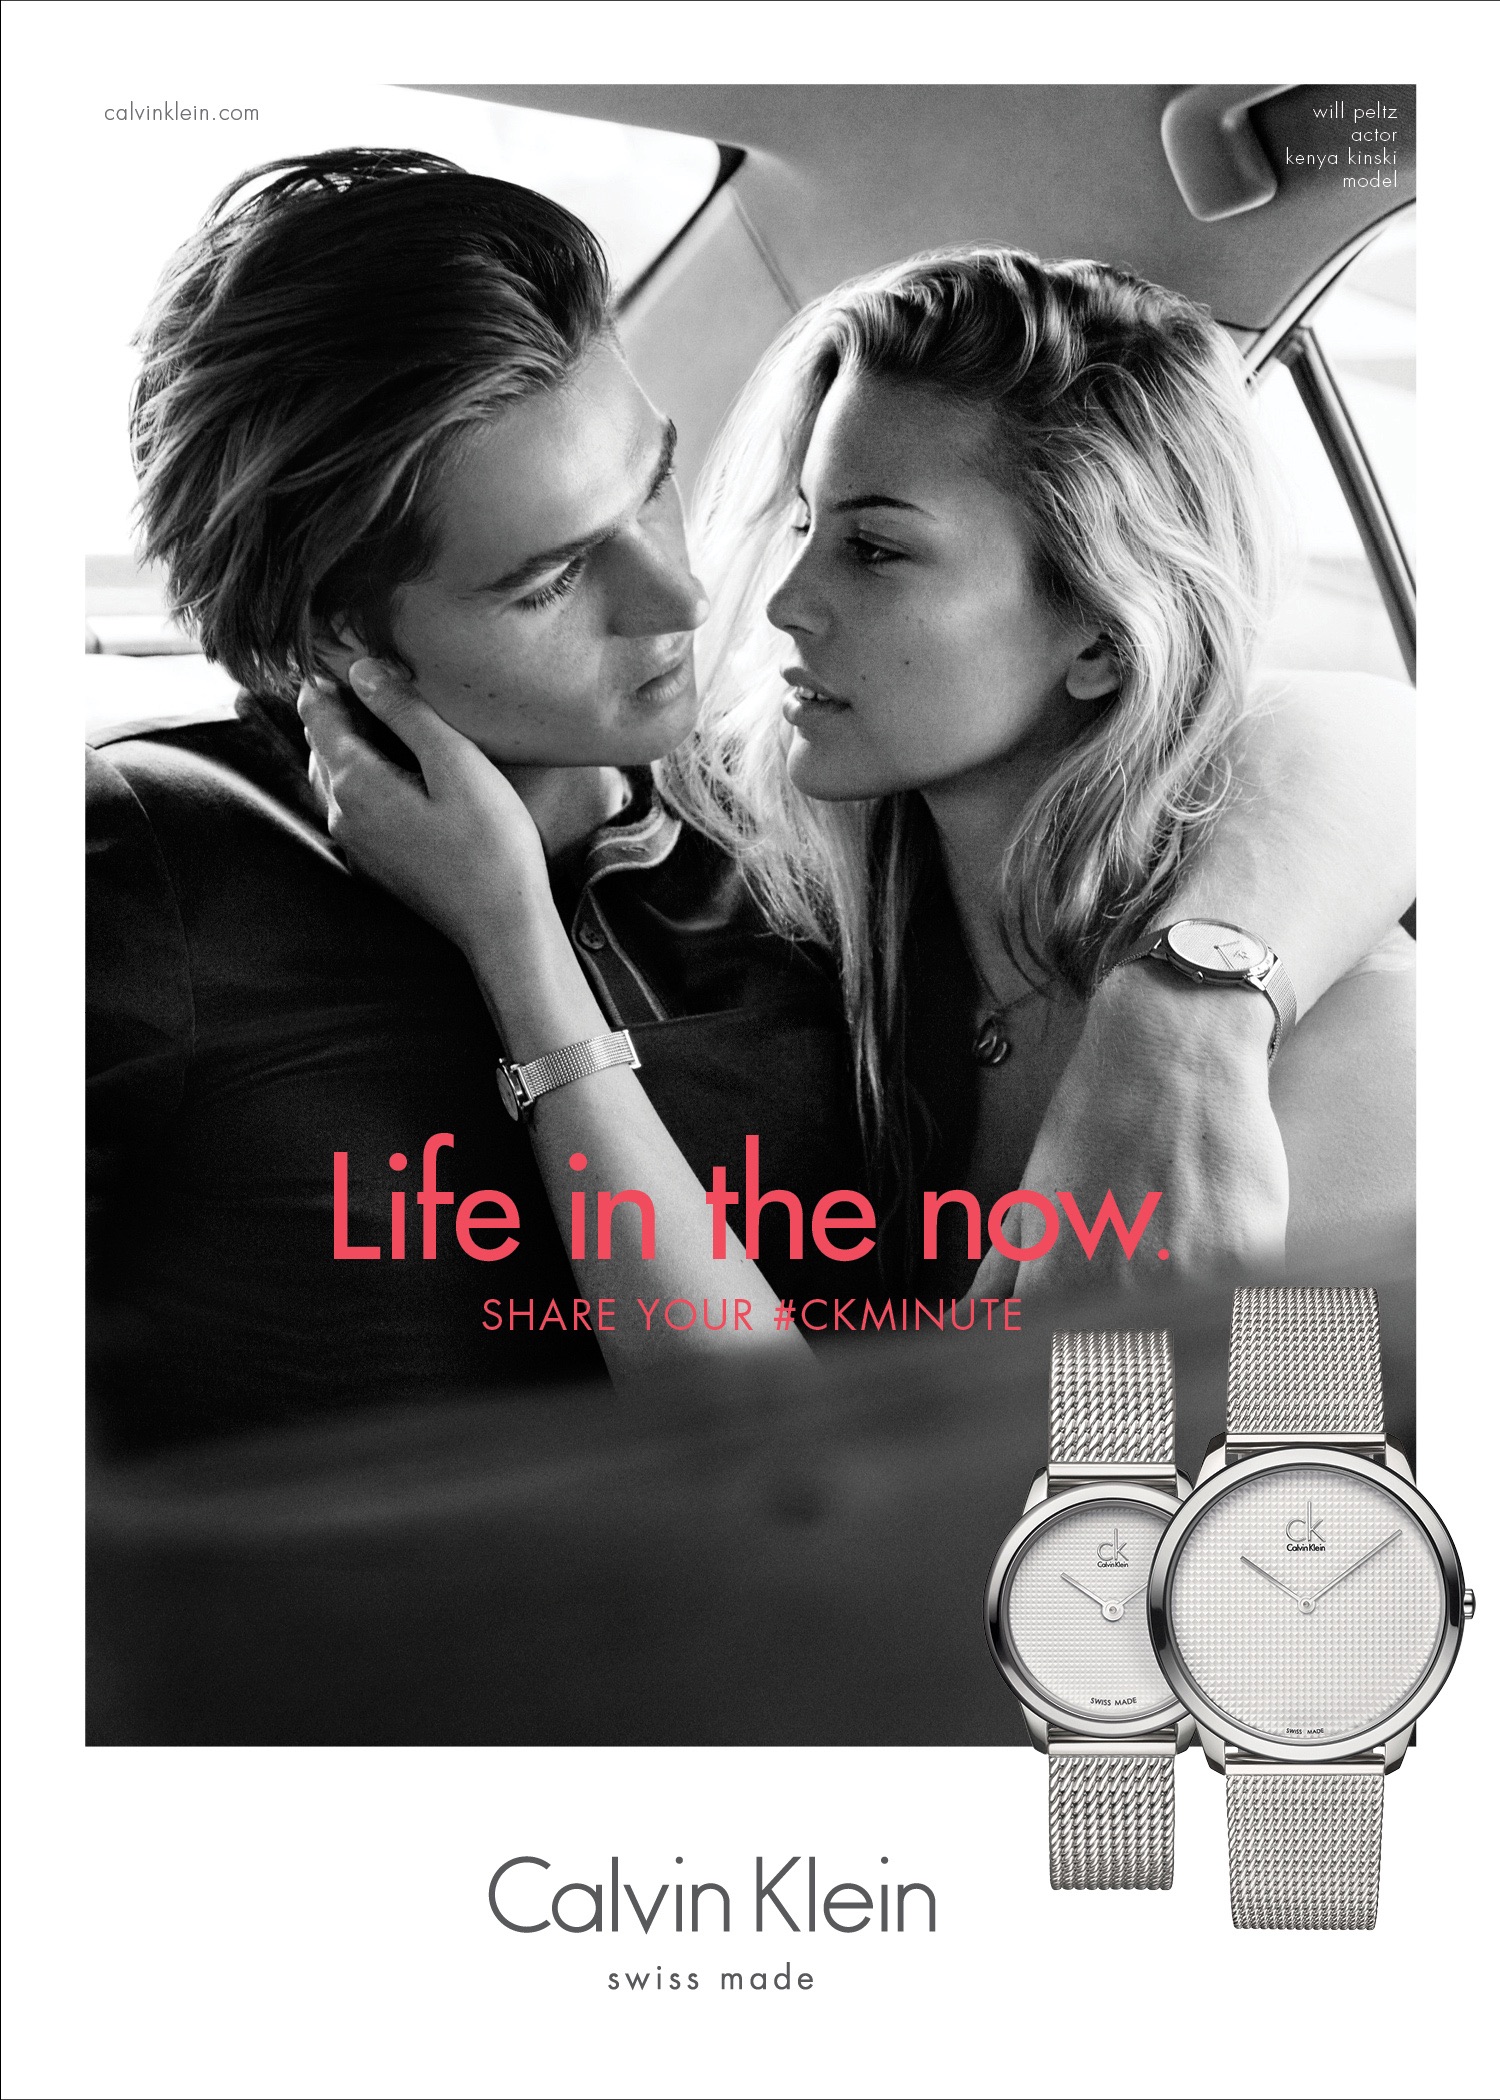 Calvin Klein Watches 2016 Campaign Will Peltz Kenya Kinski